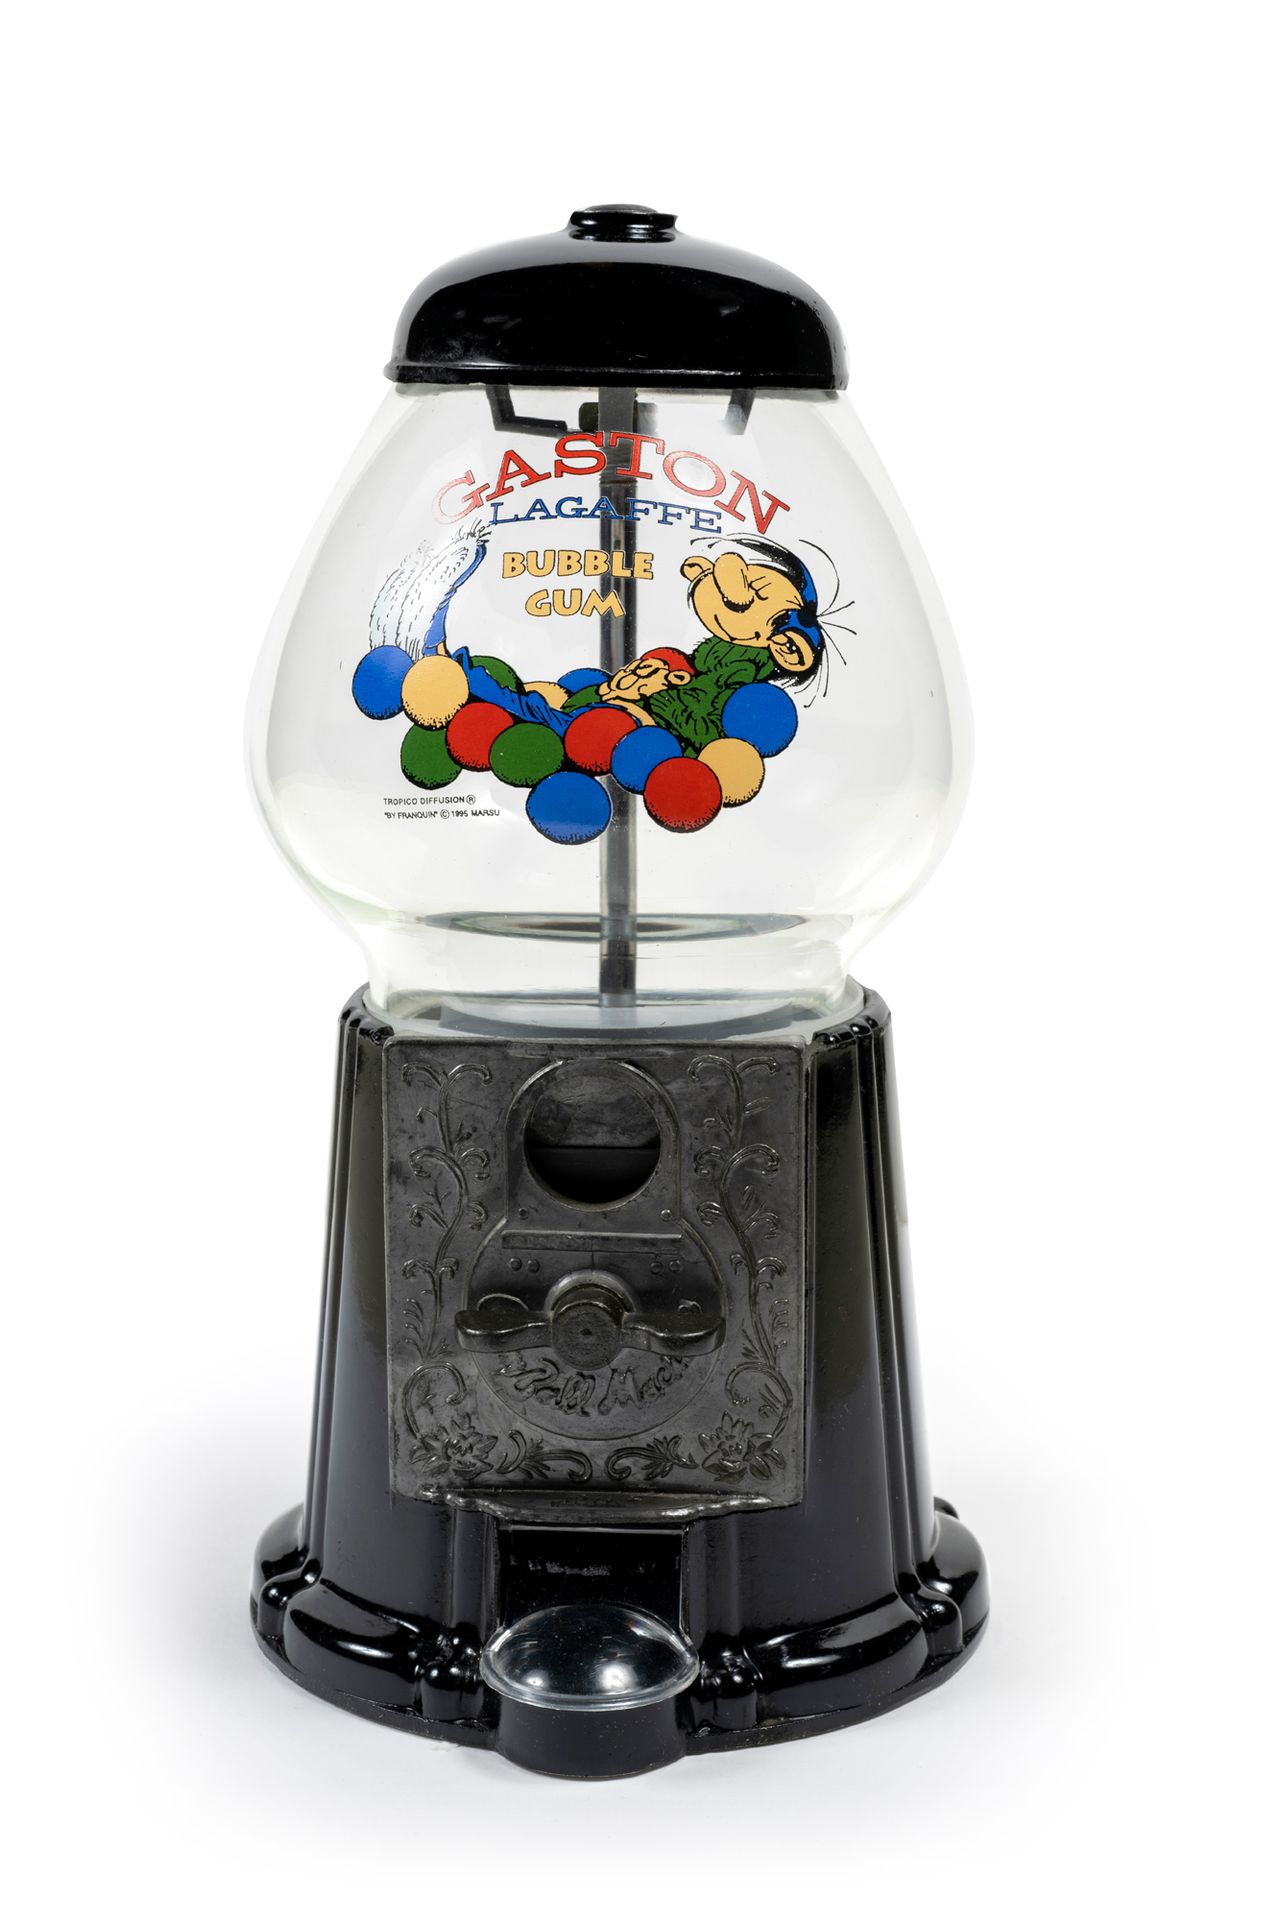 Null Gaston - Kaugummiautomat : Gaston
Bubble-gum, dekoratives Objekt mit dem Ko&hellip;